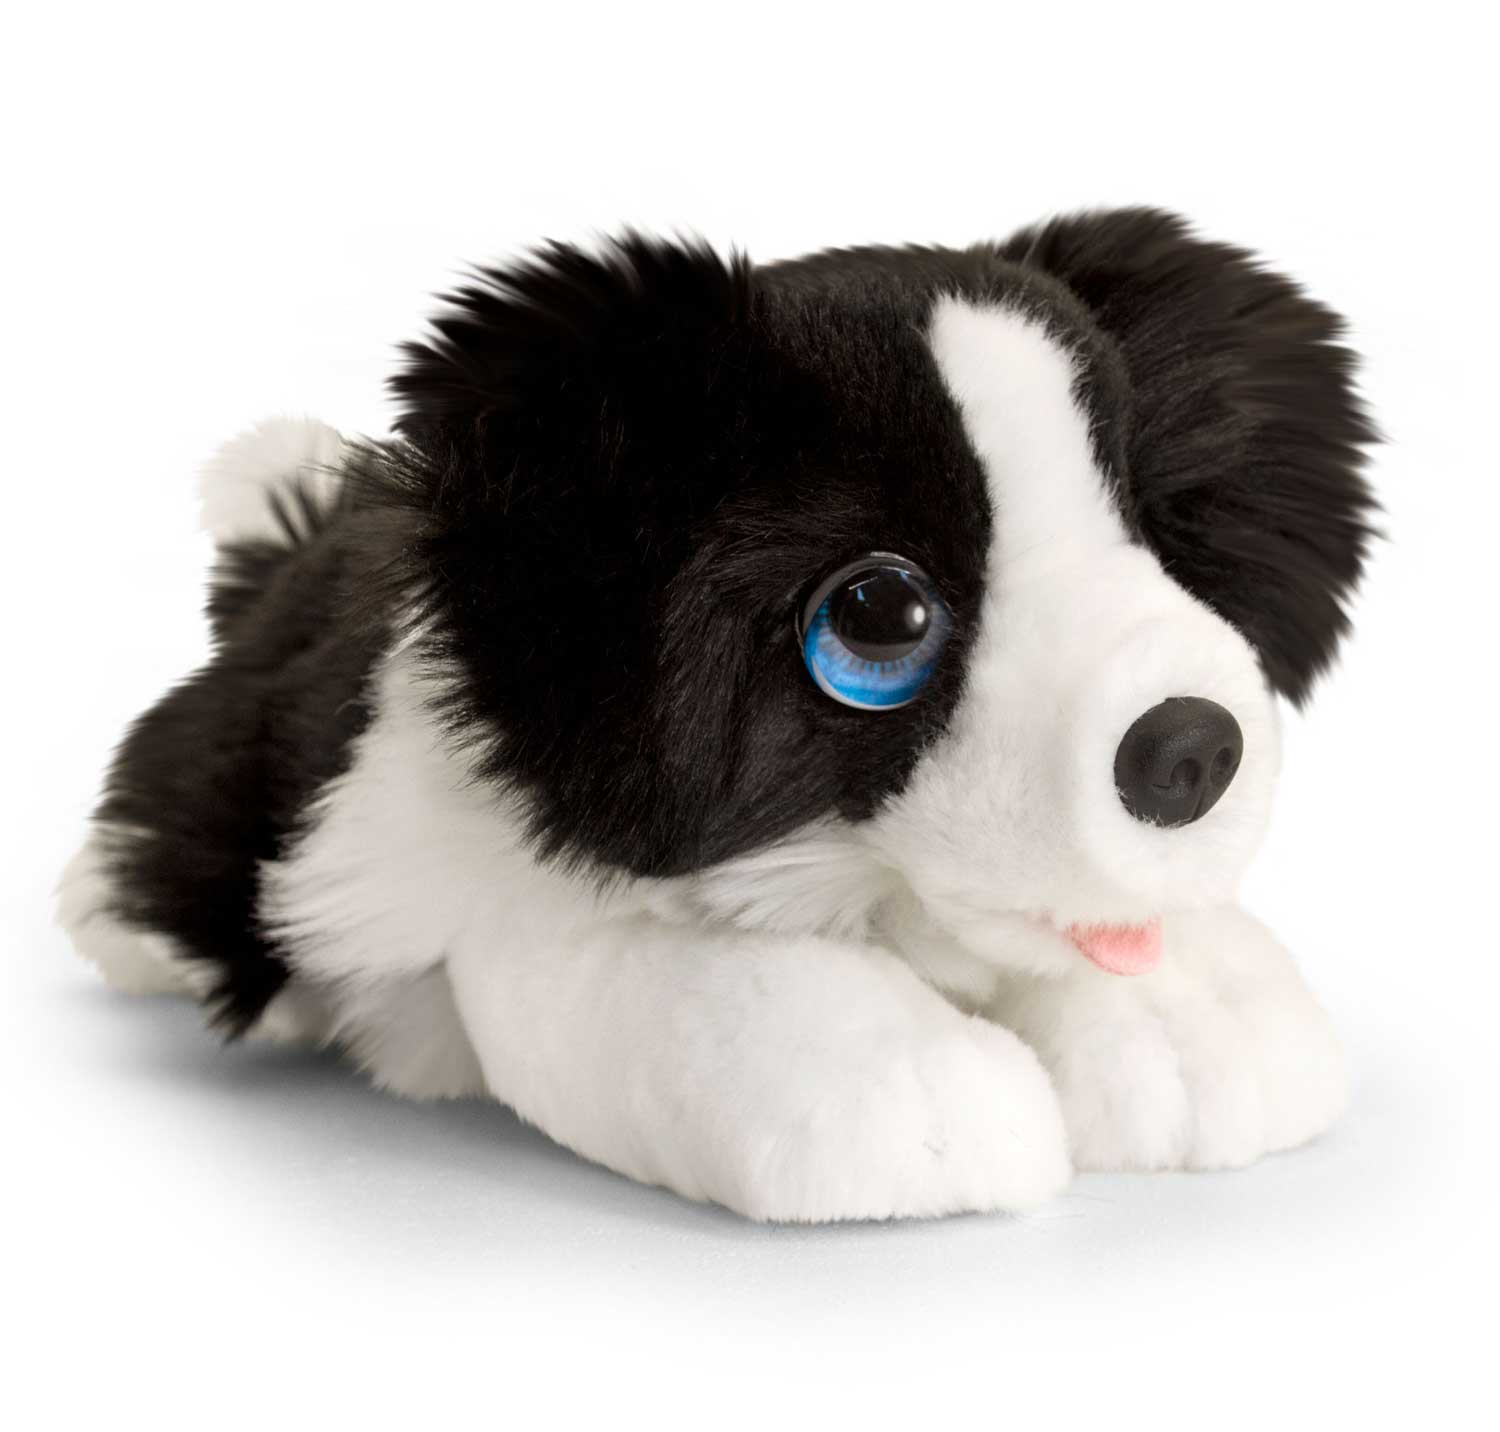 Keel Signature Cuddle Puppy Border Collie Dog Soft Toy 25cm